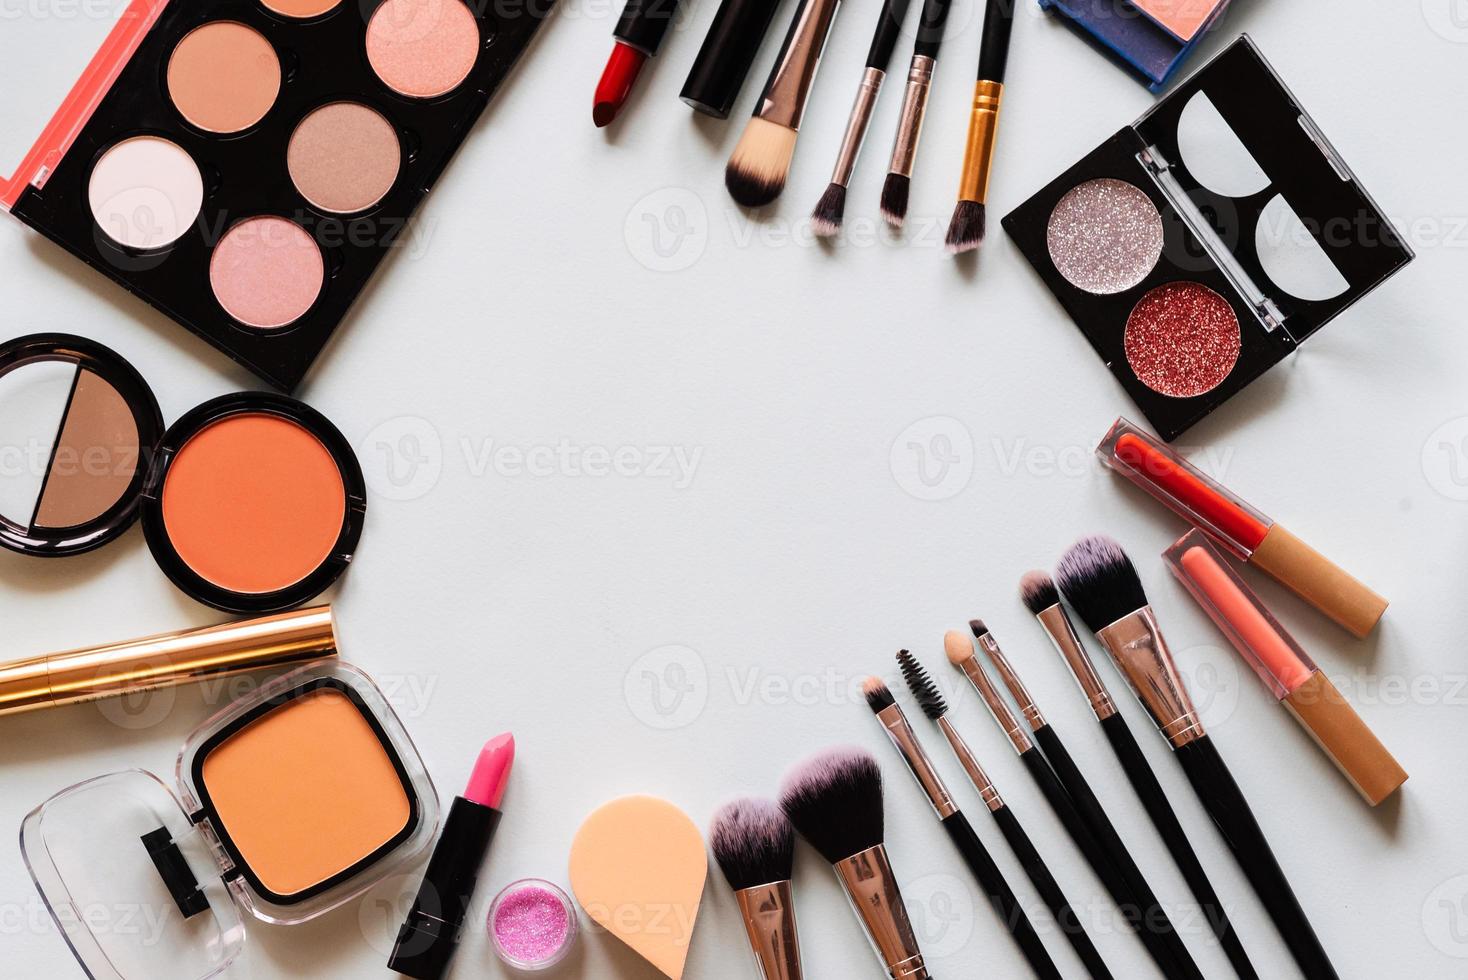 conjunto de pinceles de maquillaje cosmético profesional, sombras, pintalabios - fondo claro aislado. vista aérea colocar texto foto